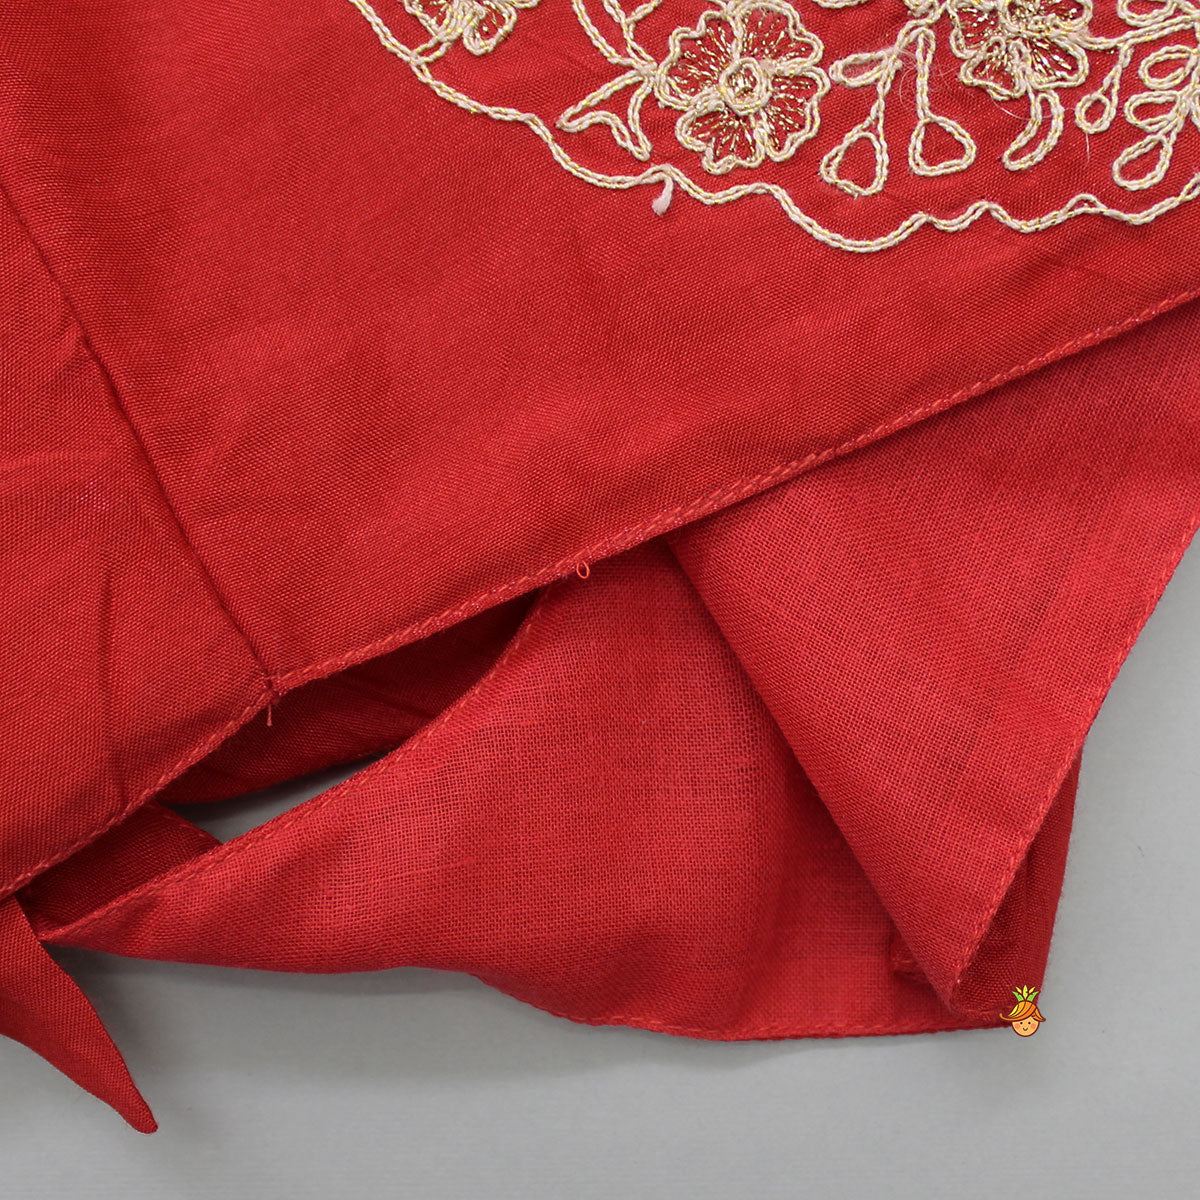 Dual Back Knot Detail Red Top And Tassels Enhanced Lehenga